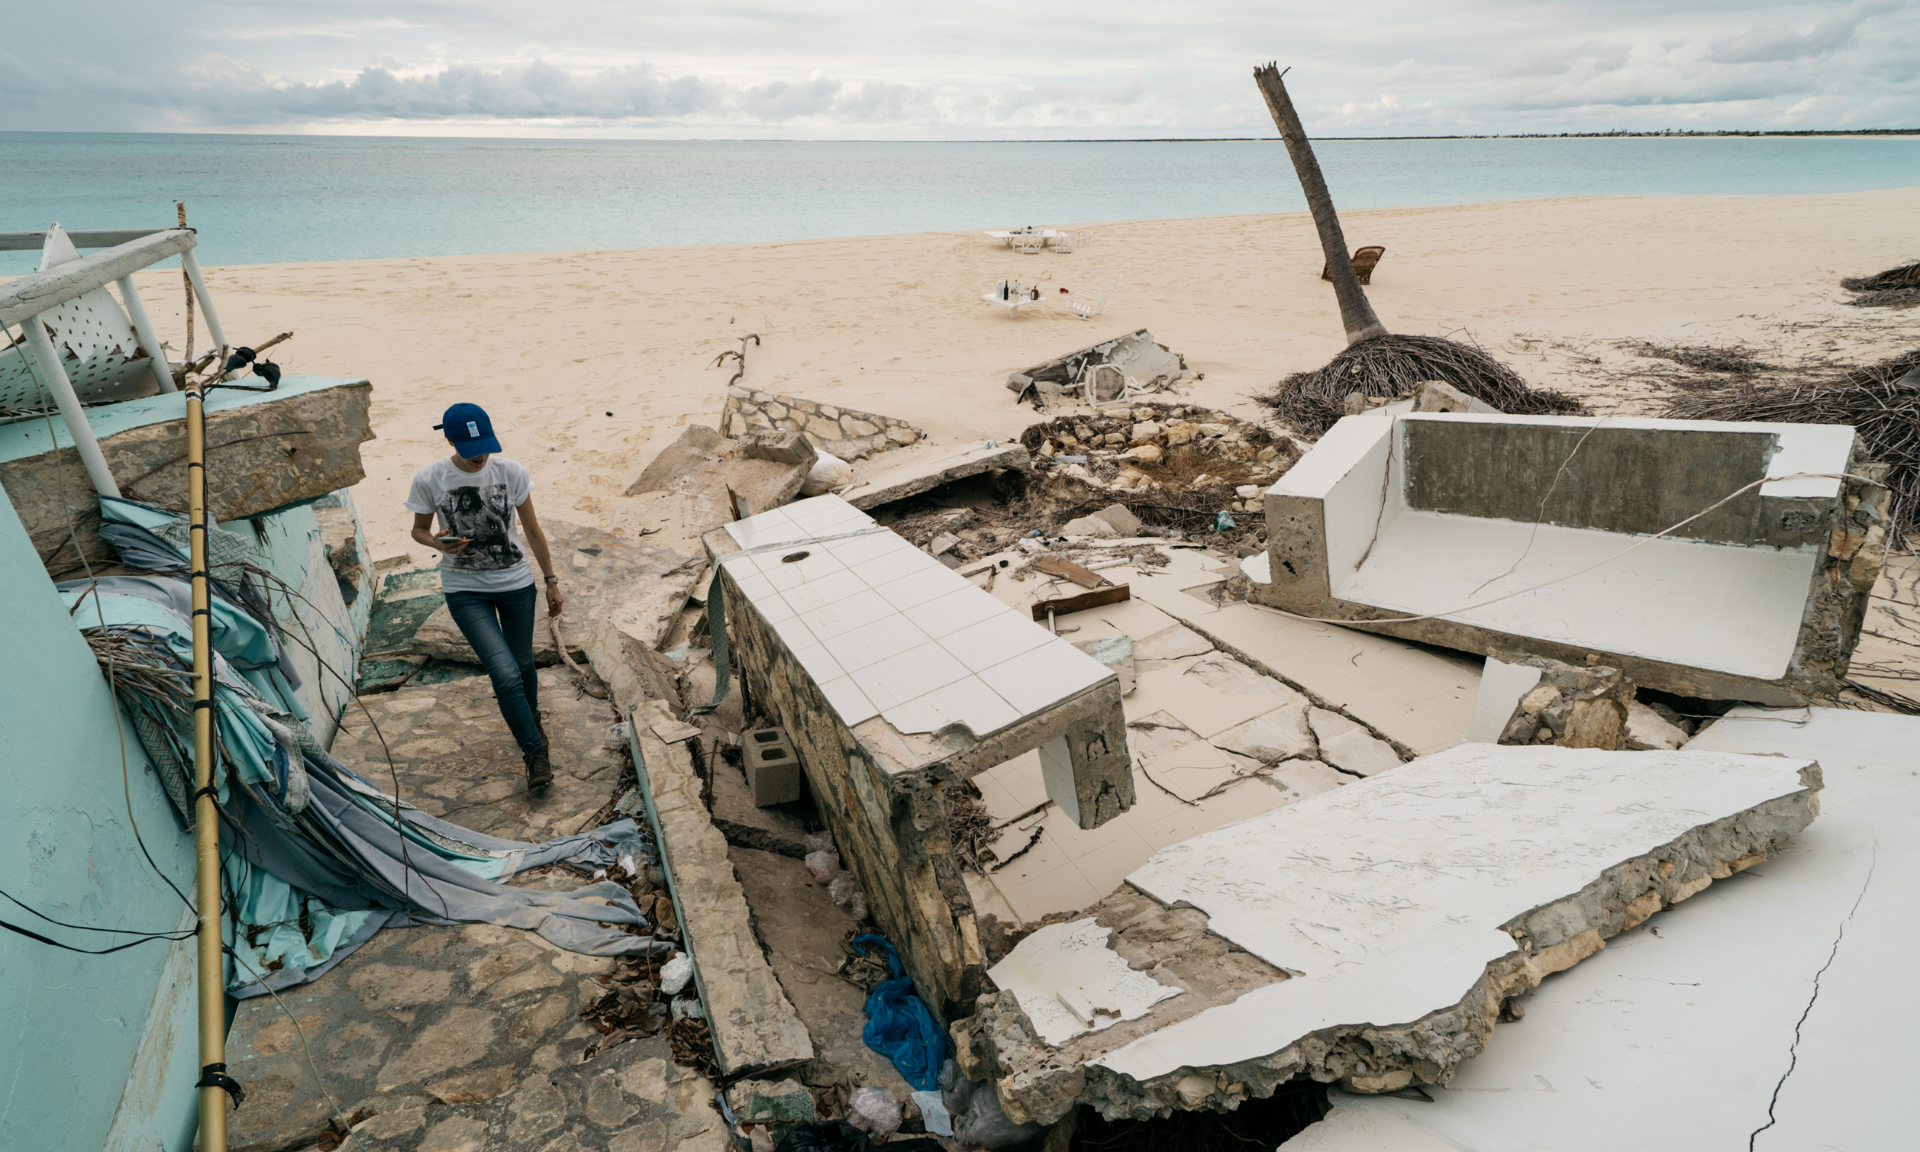 Barbuda, six months after Hurricane Irma struck in 2015.